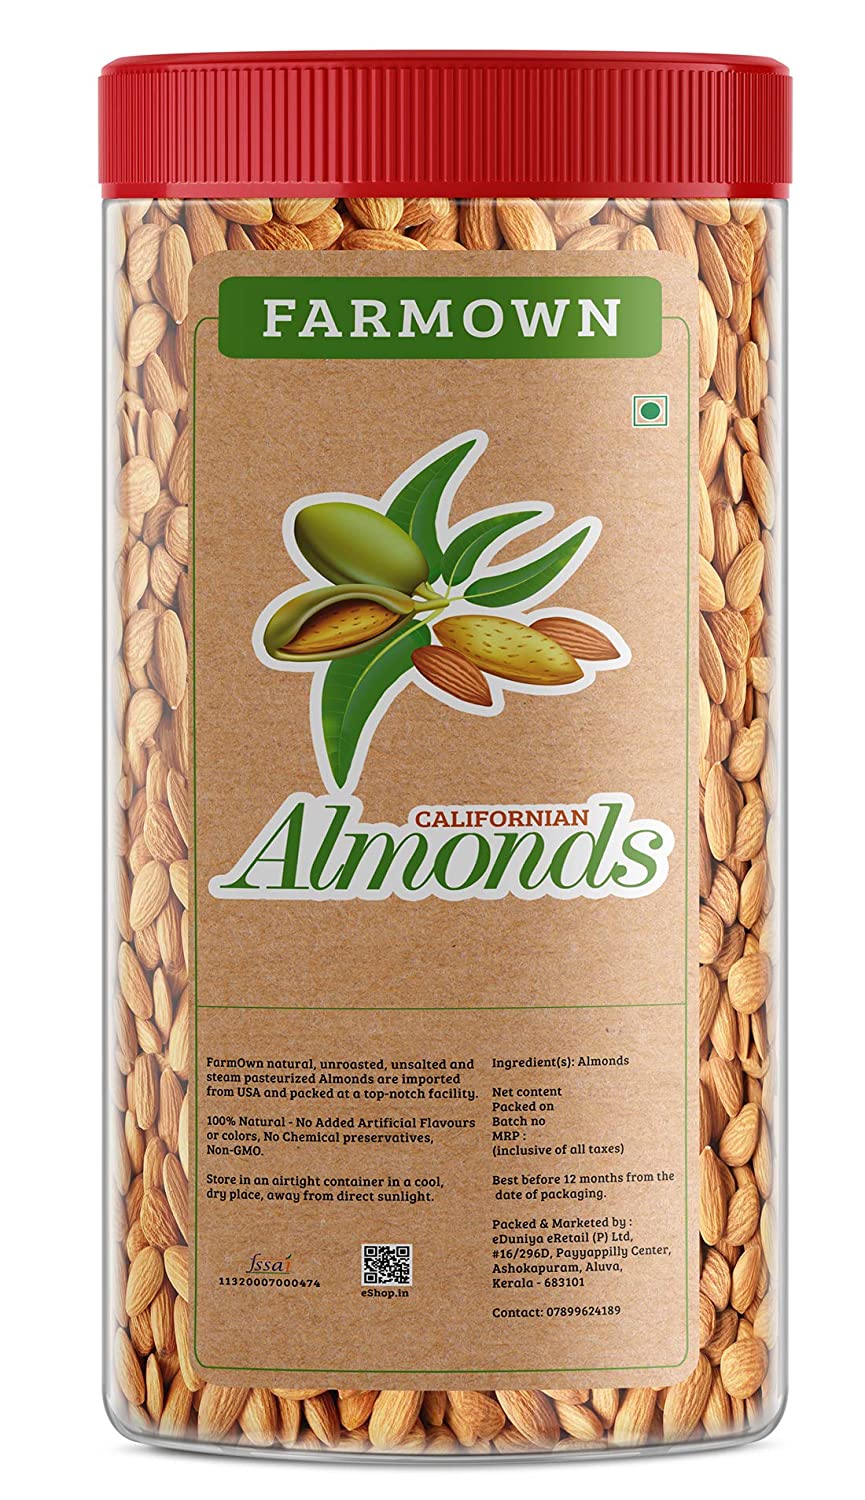 Farmown California Almond Image